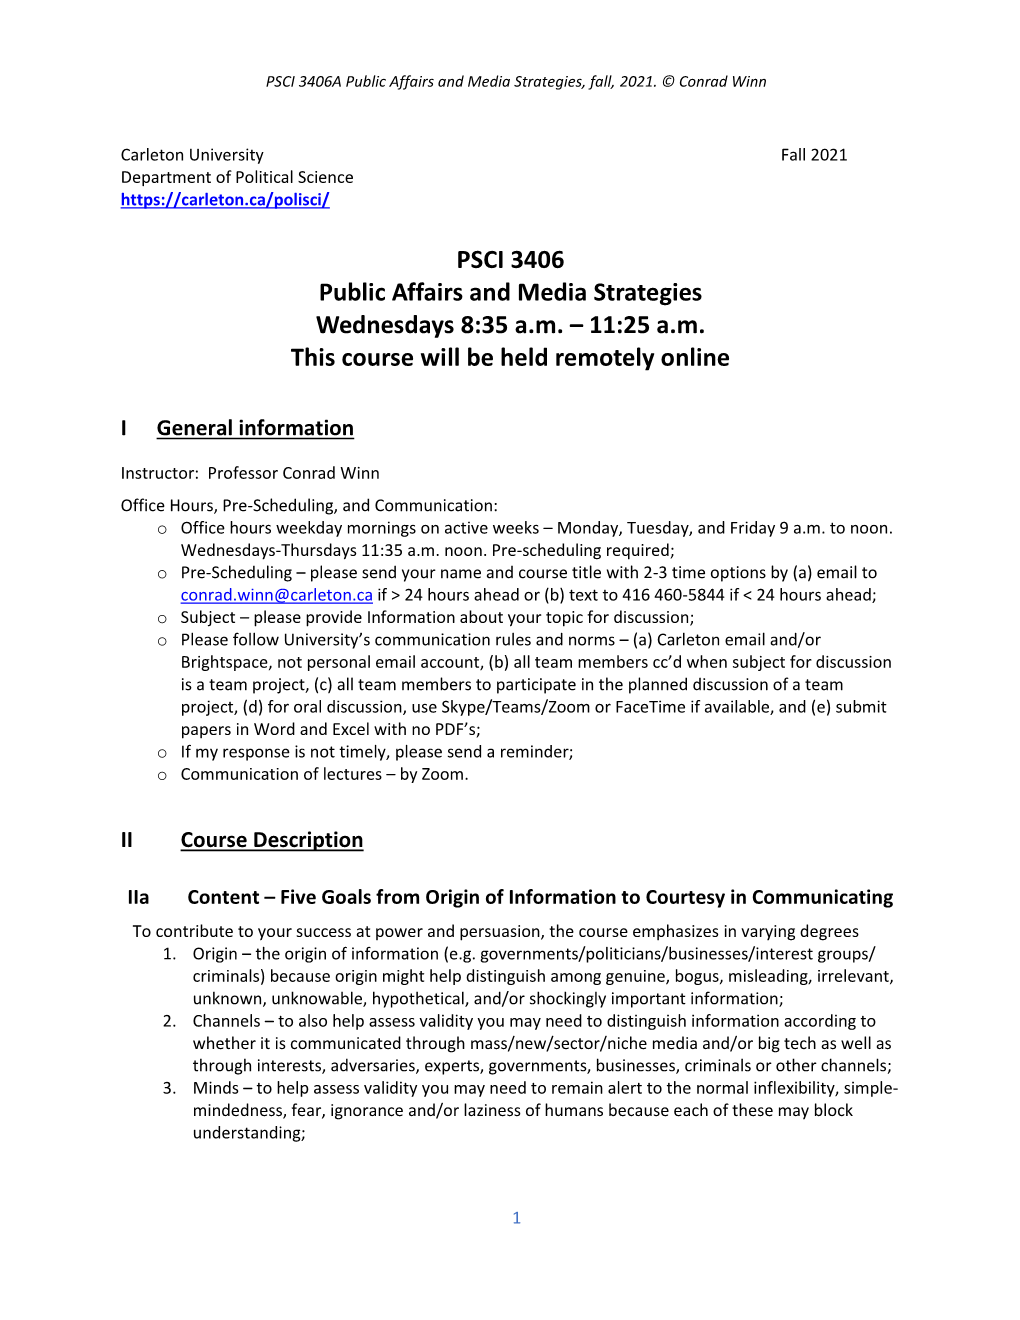 PSCI 3406 Public Affairs and Media Strategies Wednesdays 8:35 Am